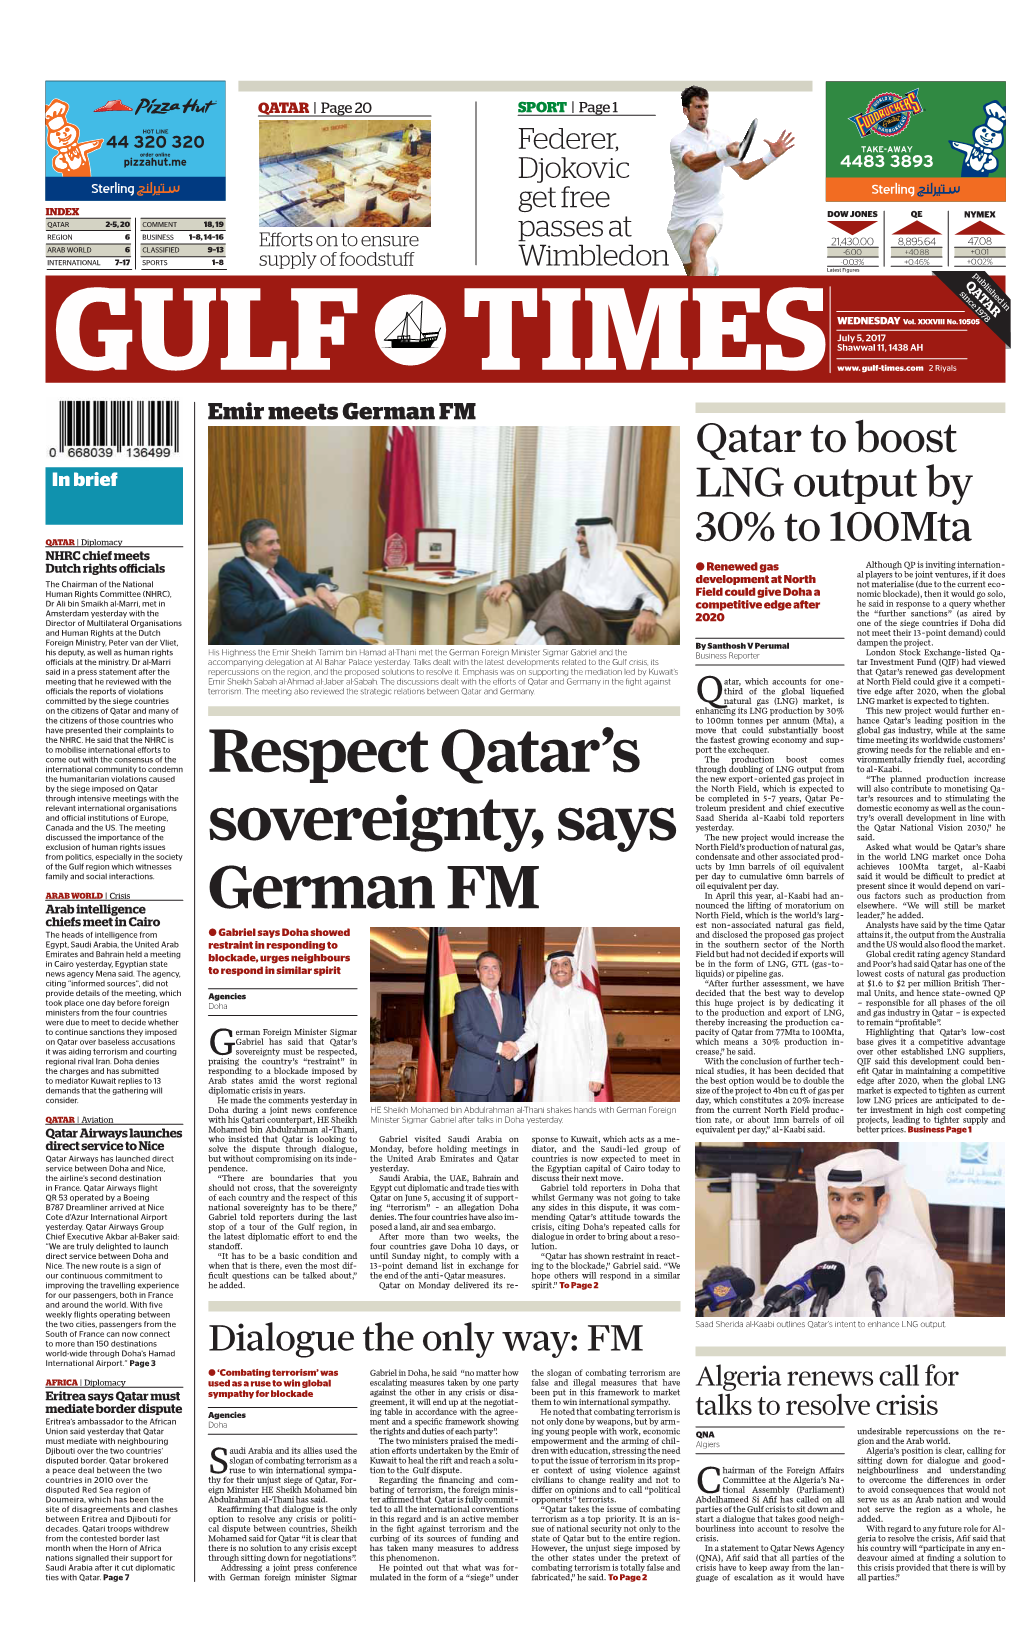 Respect Qatar's Sovereignty, Says German FM